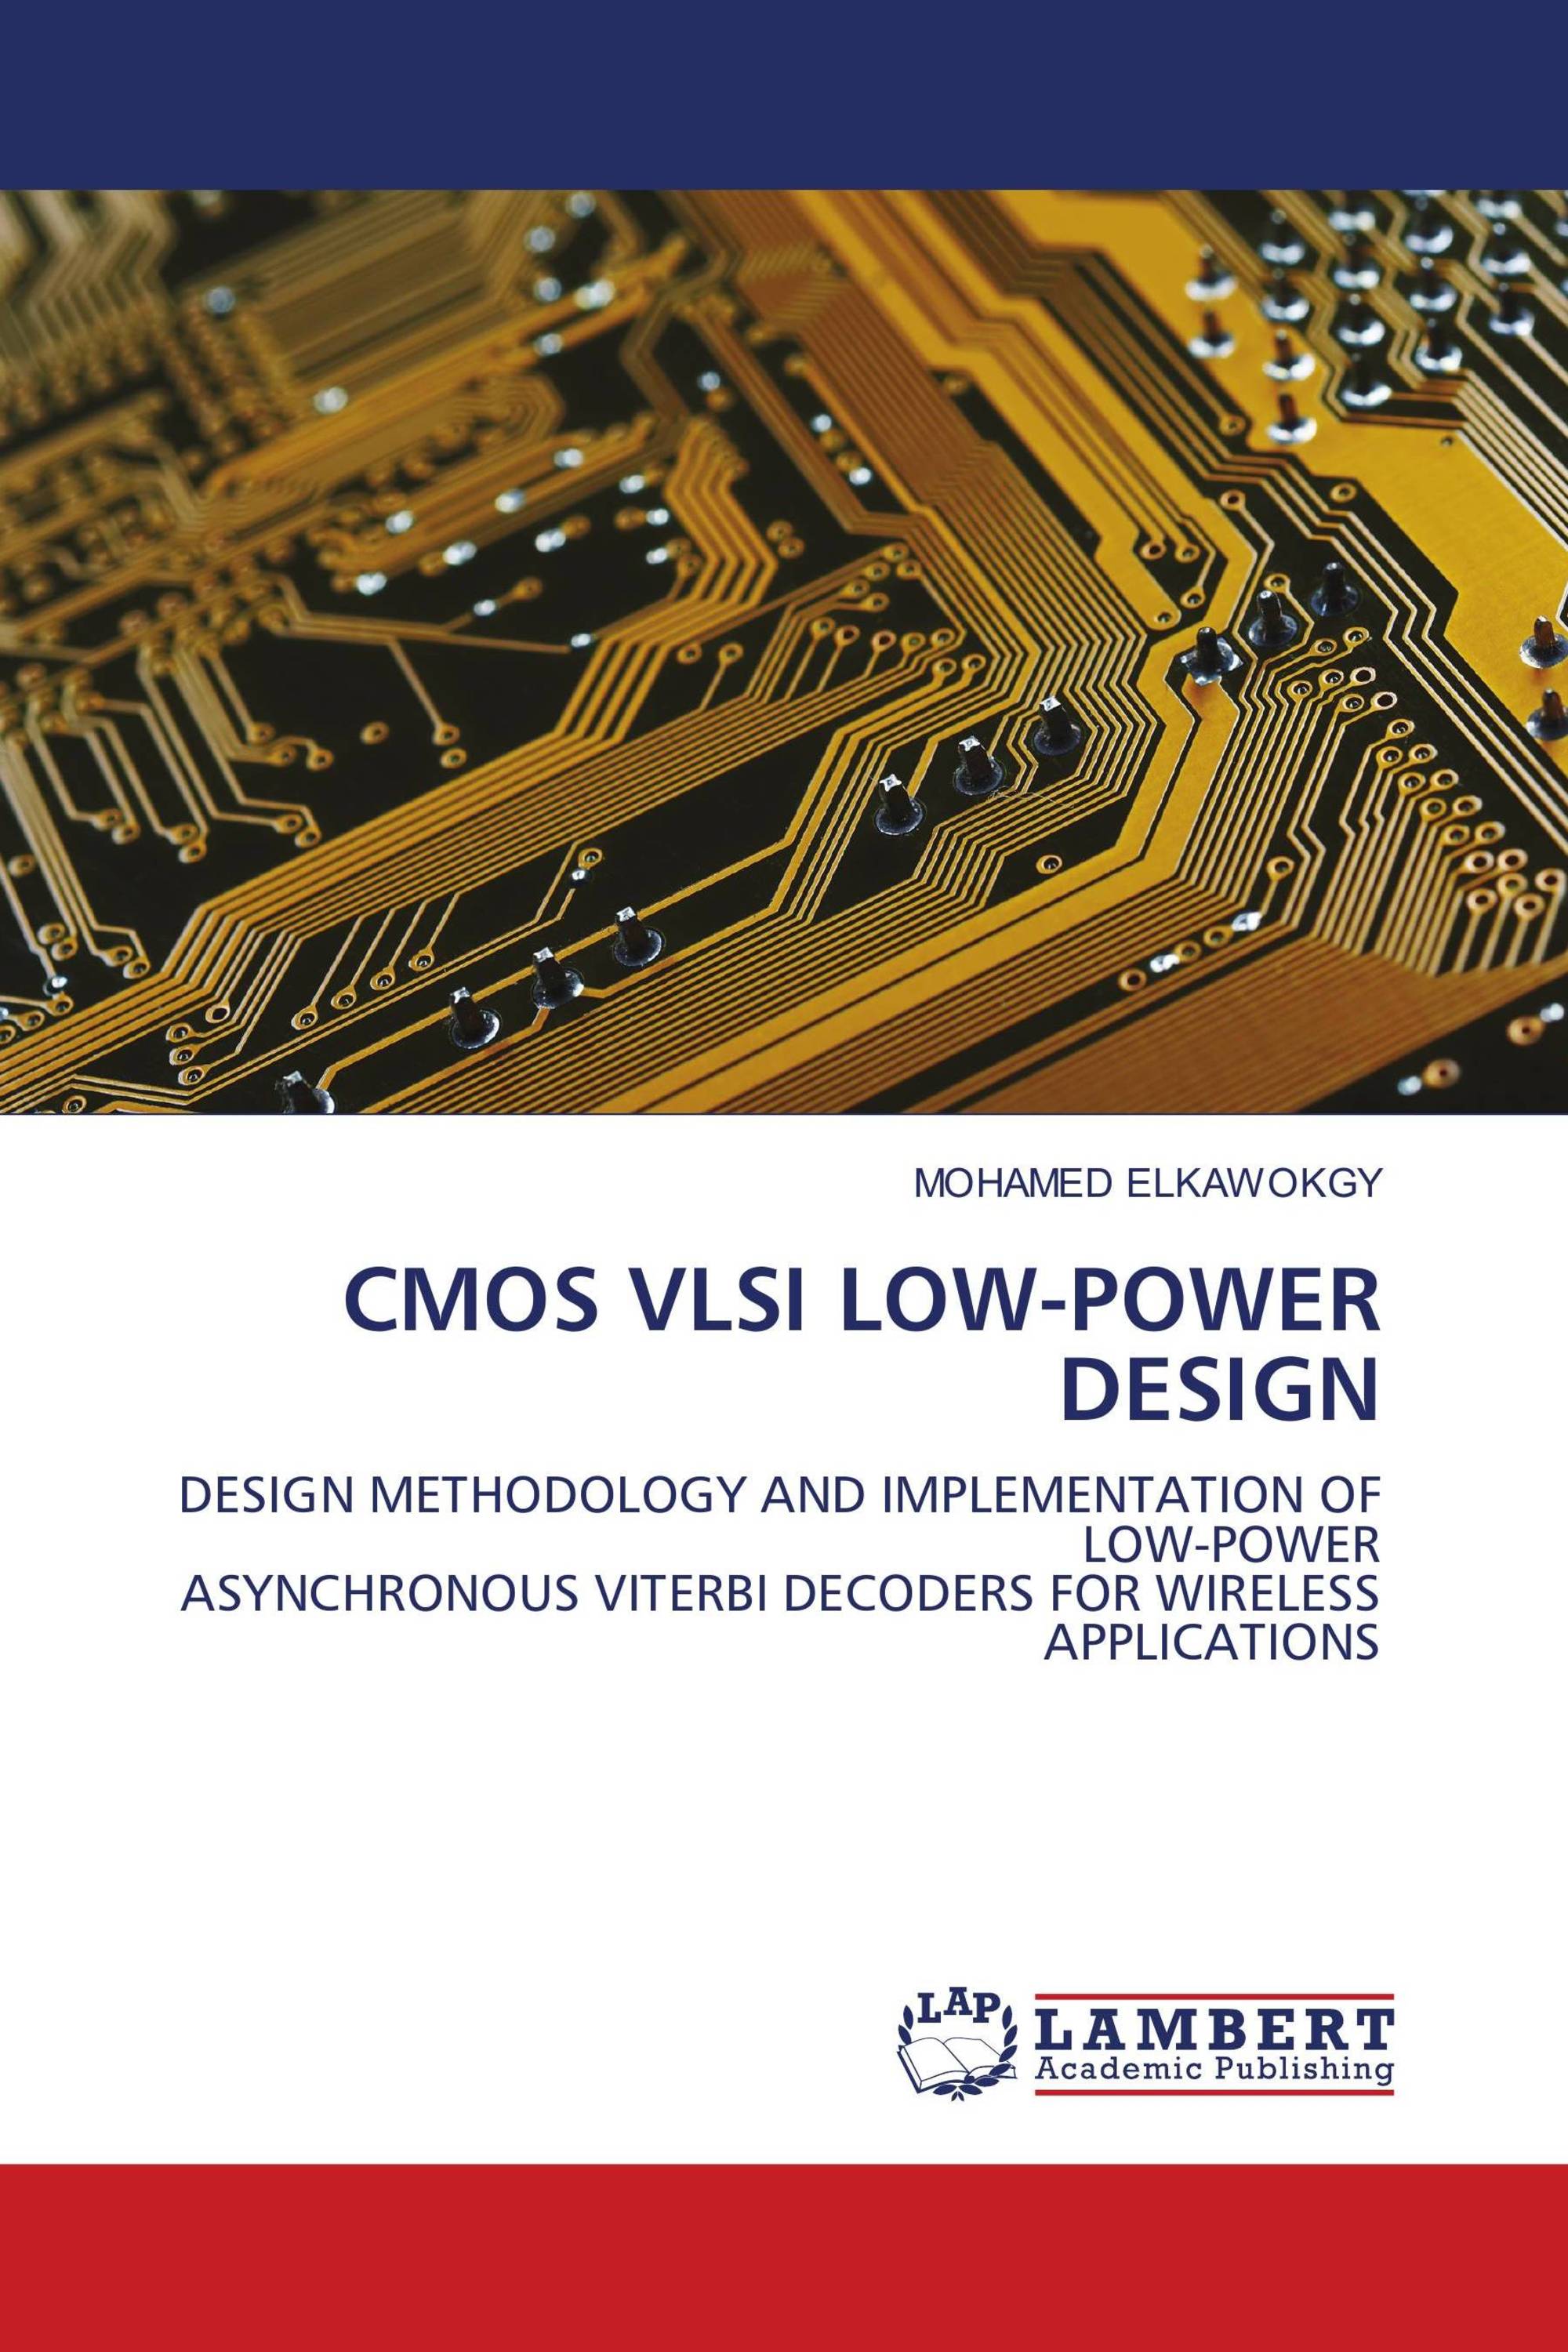 CMOS VLSI LOW-POWER DESIGN